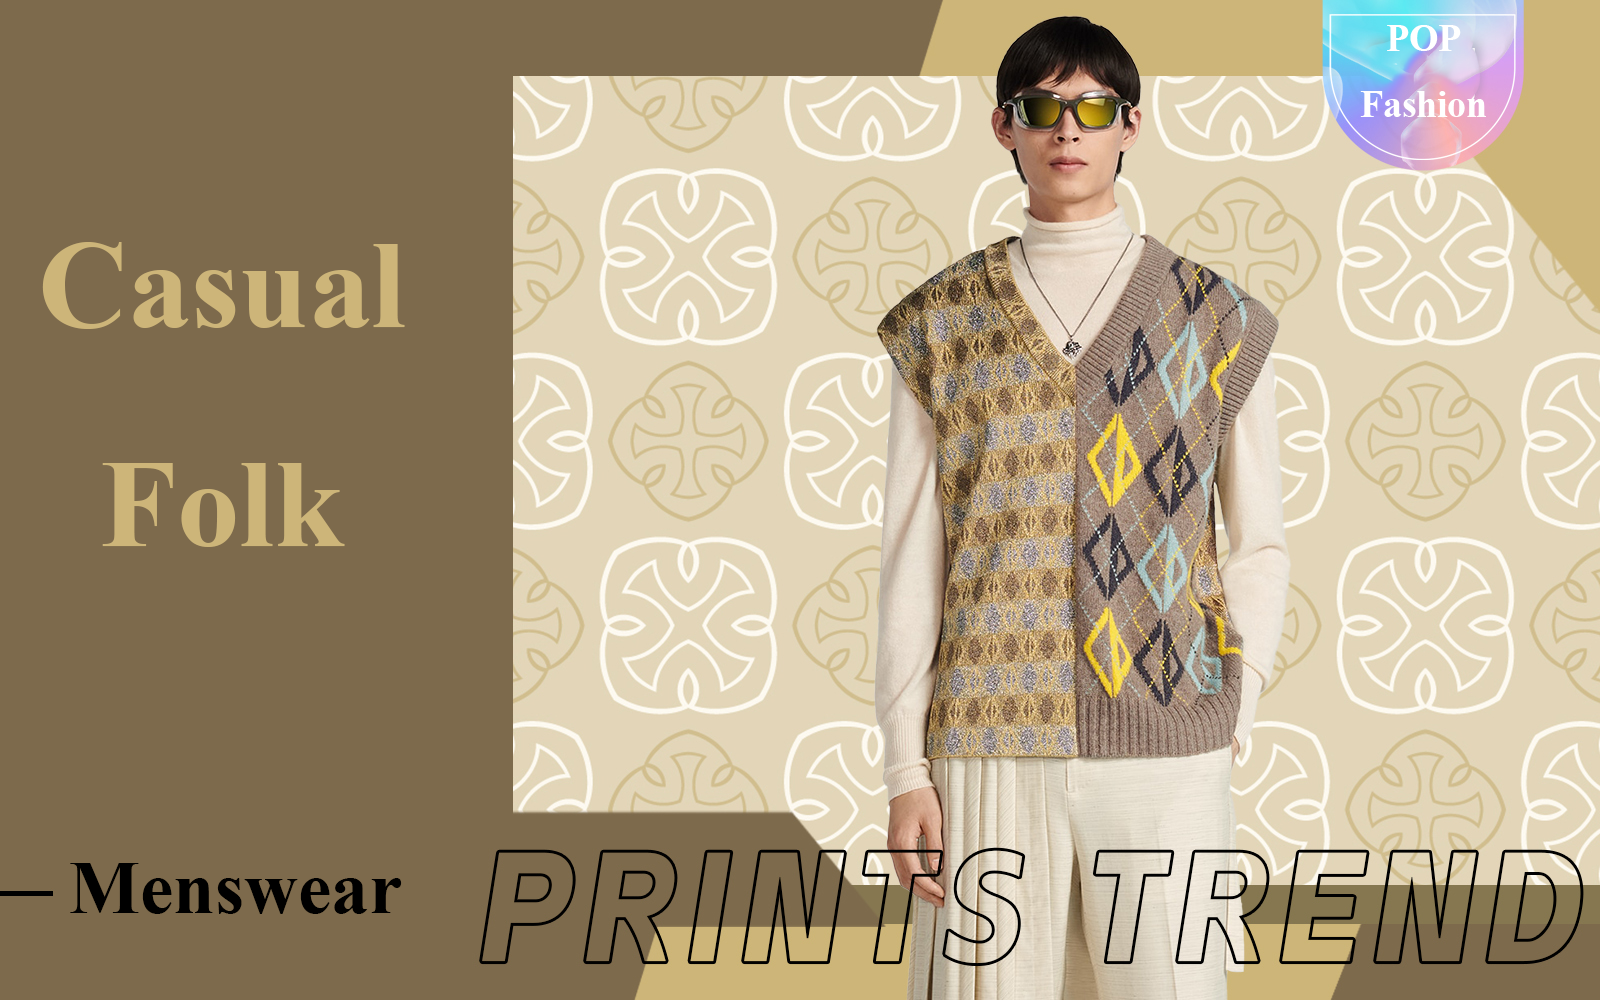 Casual Folk -- The Pattern Trend for Menswear